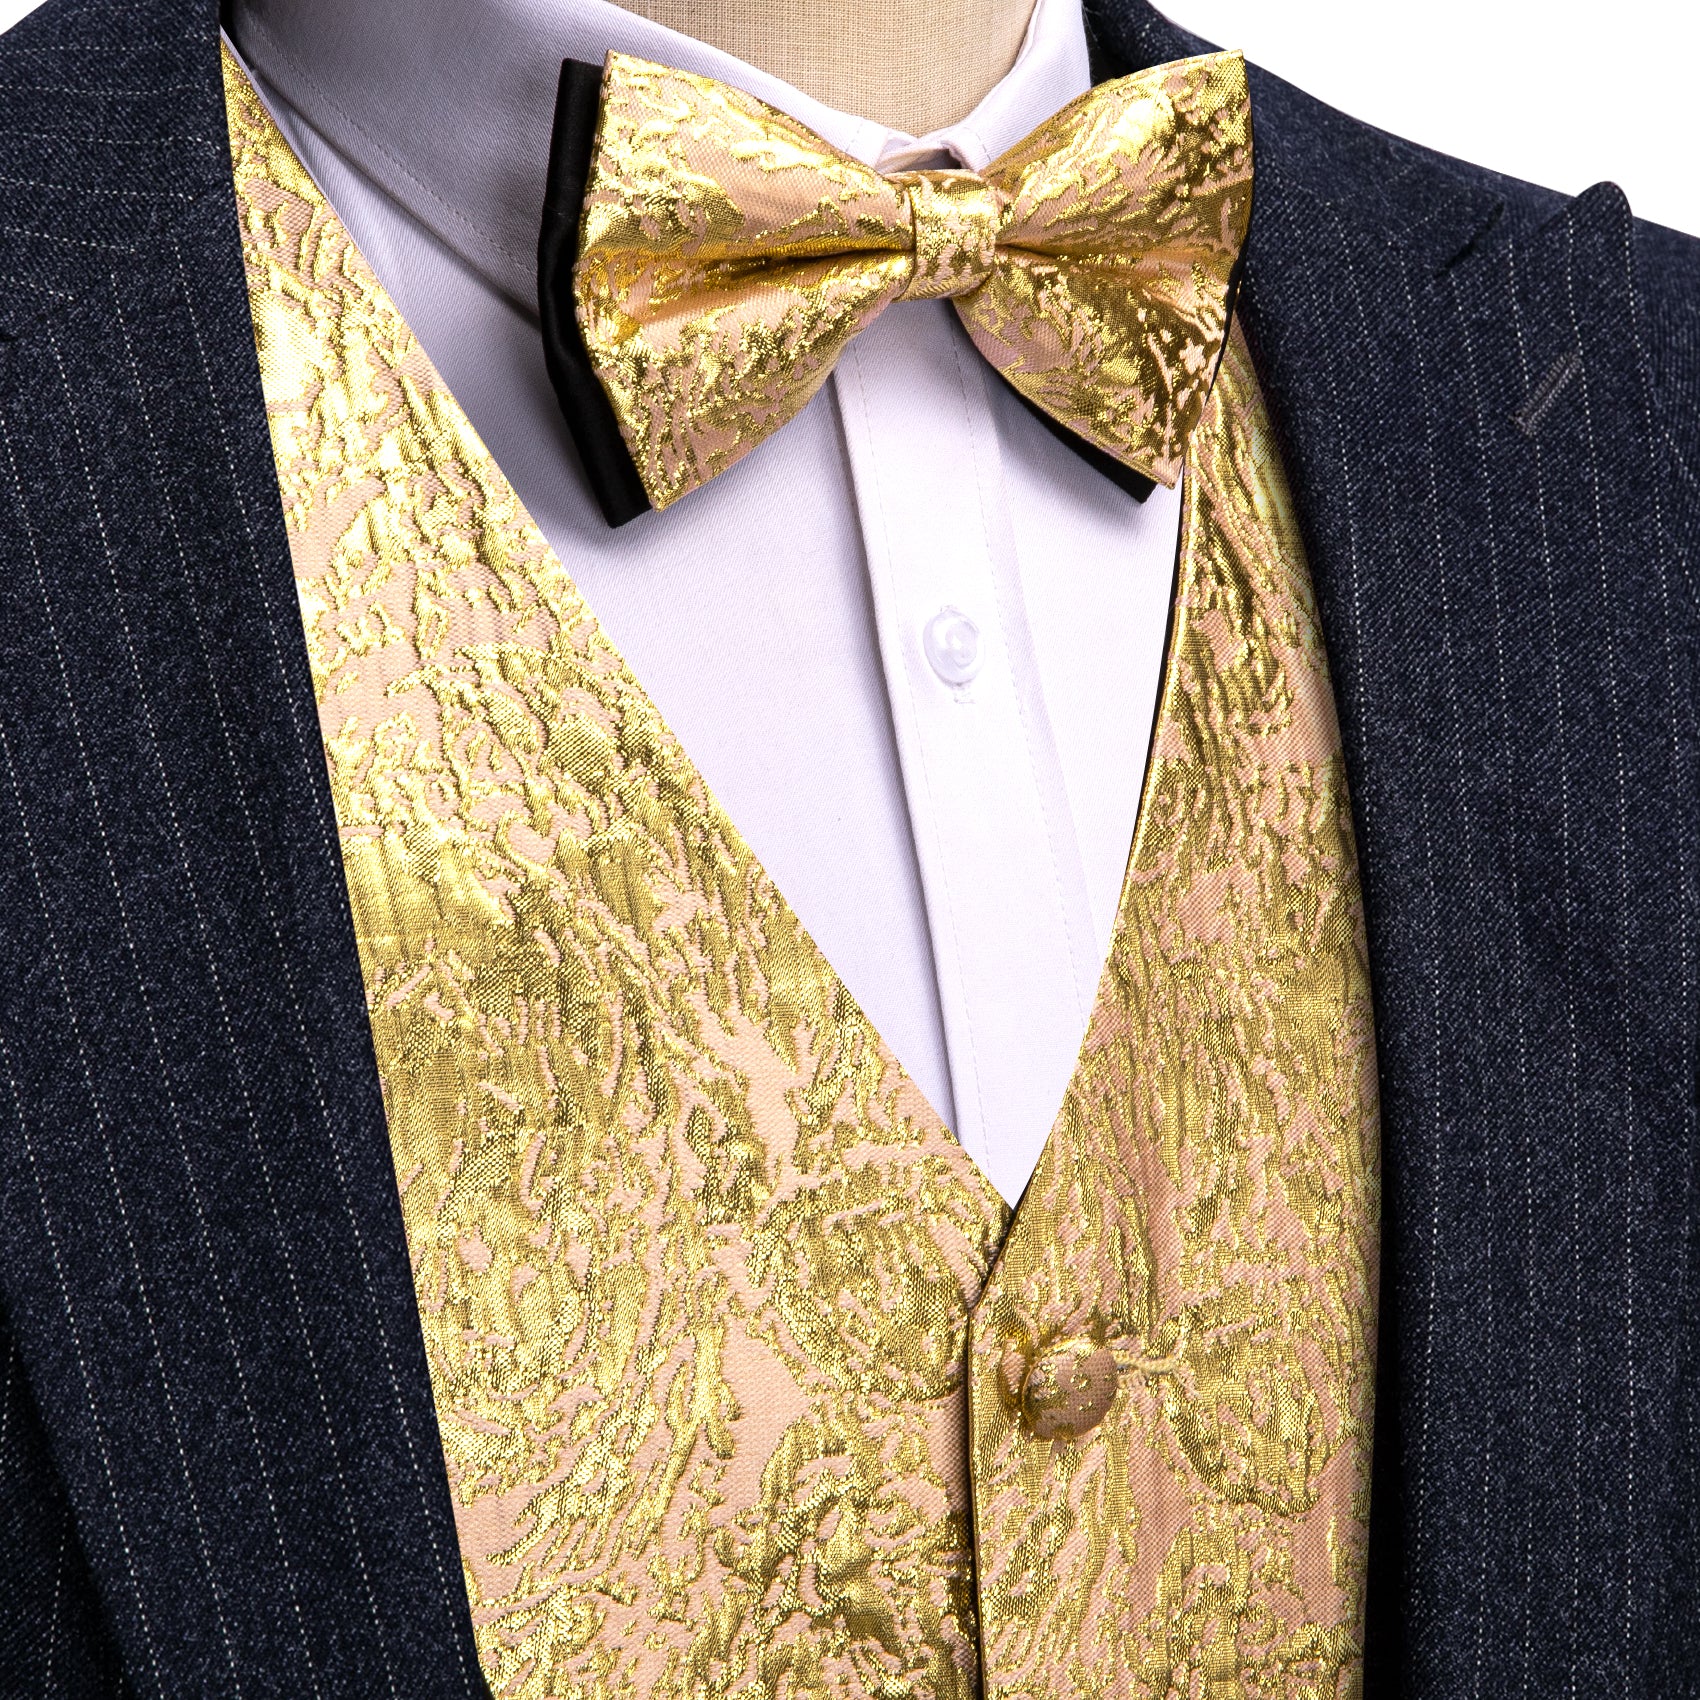 Fashion Men's Gold Silk Bow tie Waistcoat Vest Set